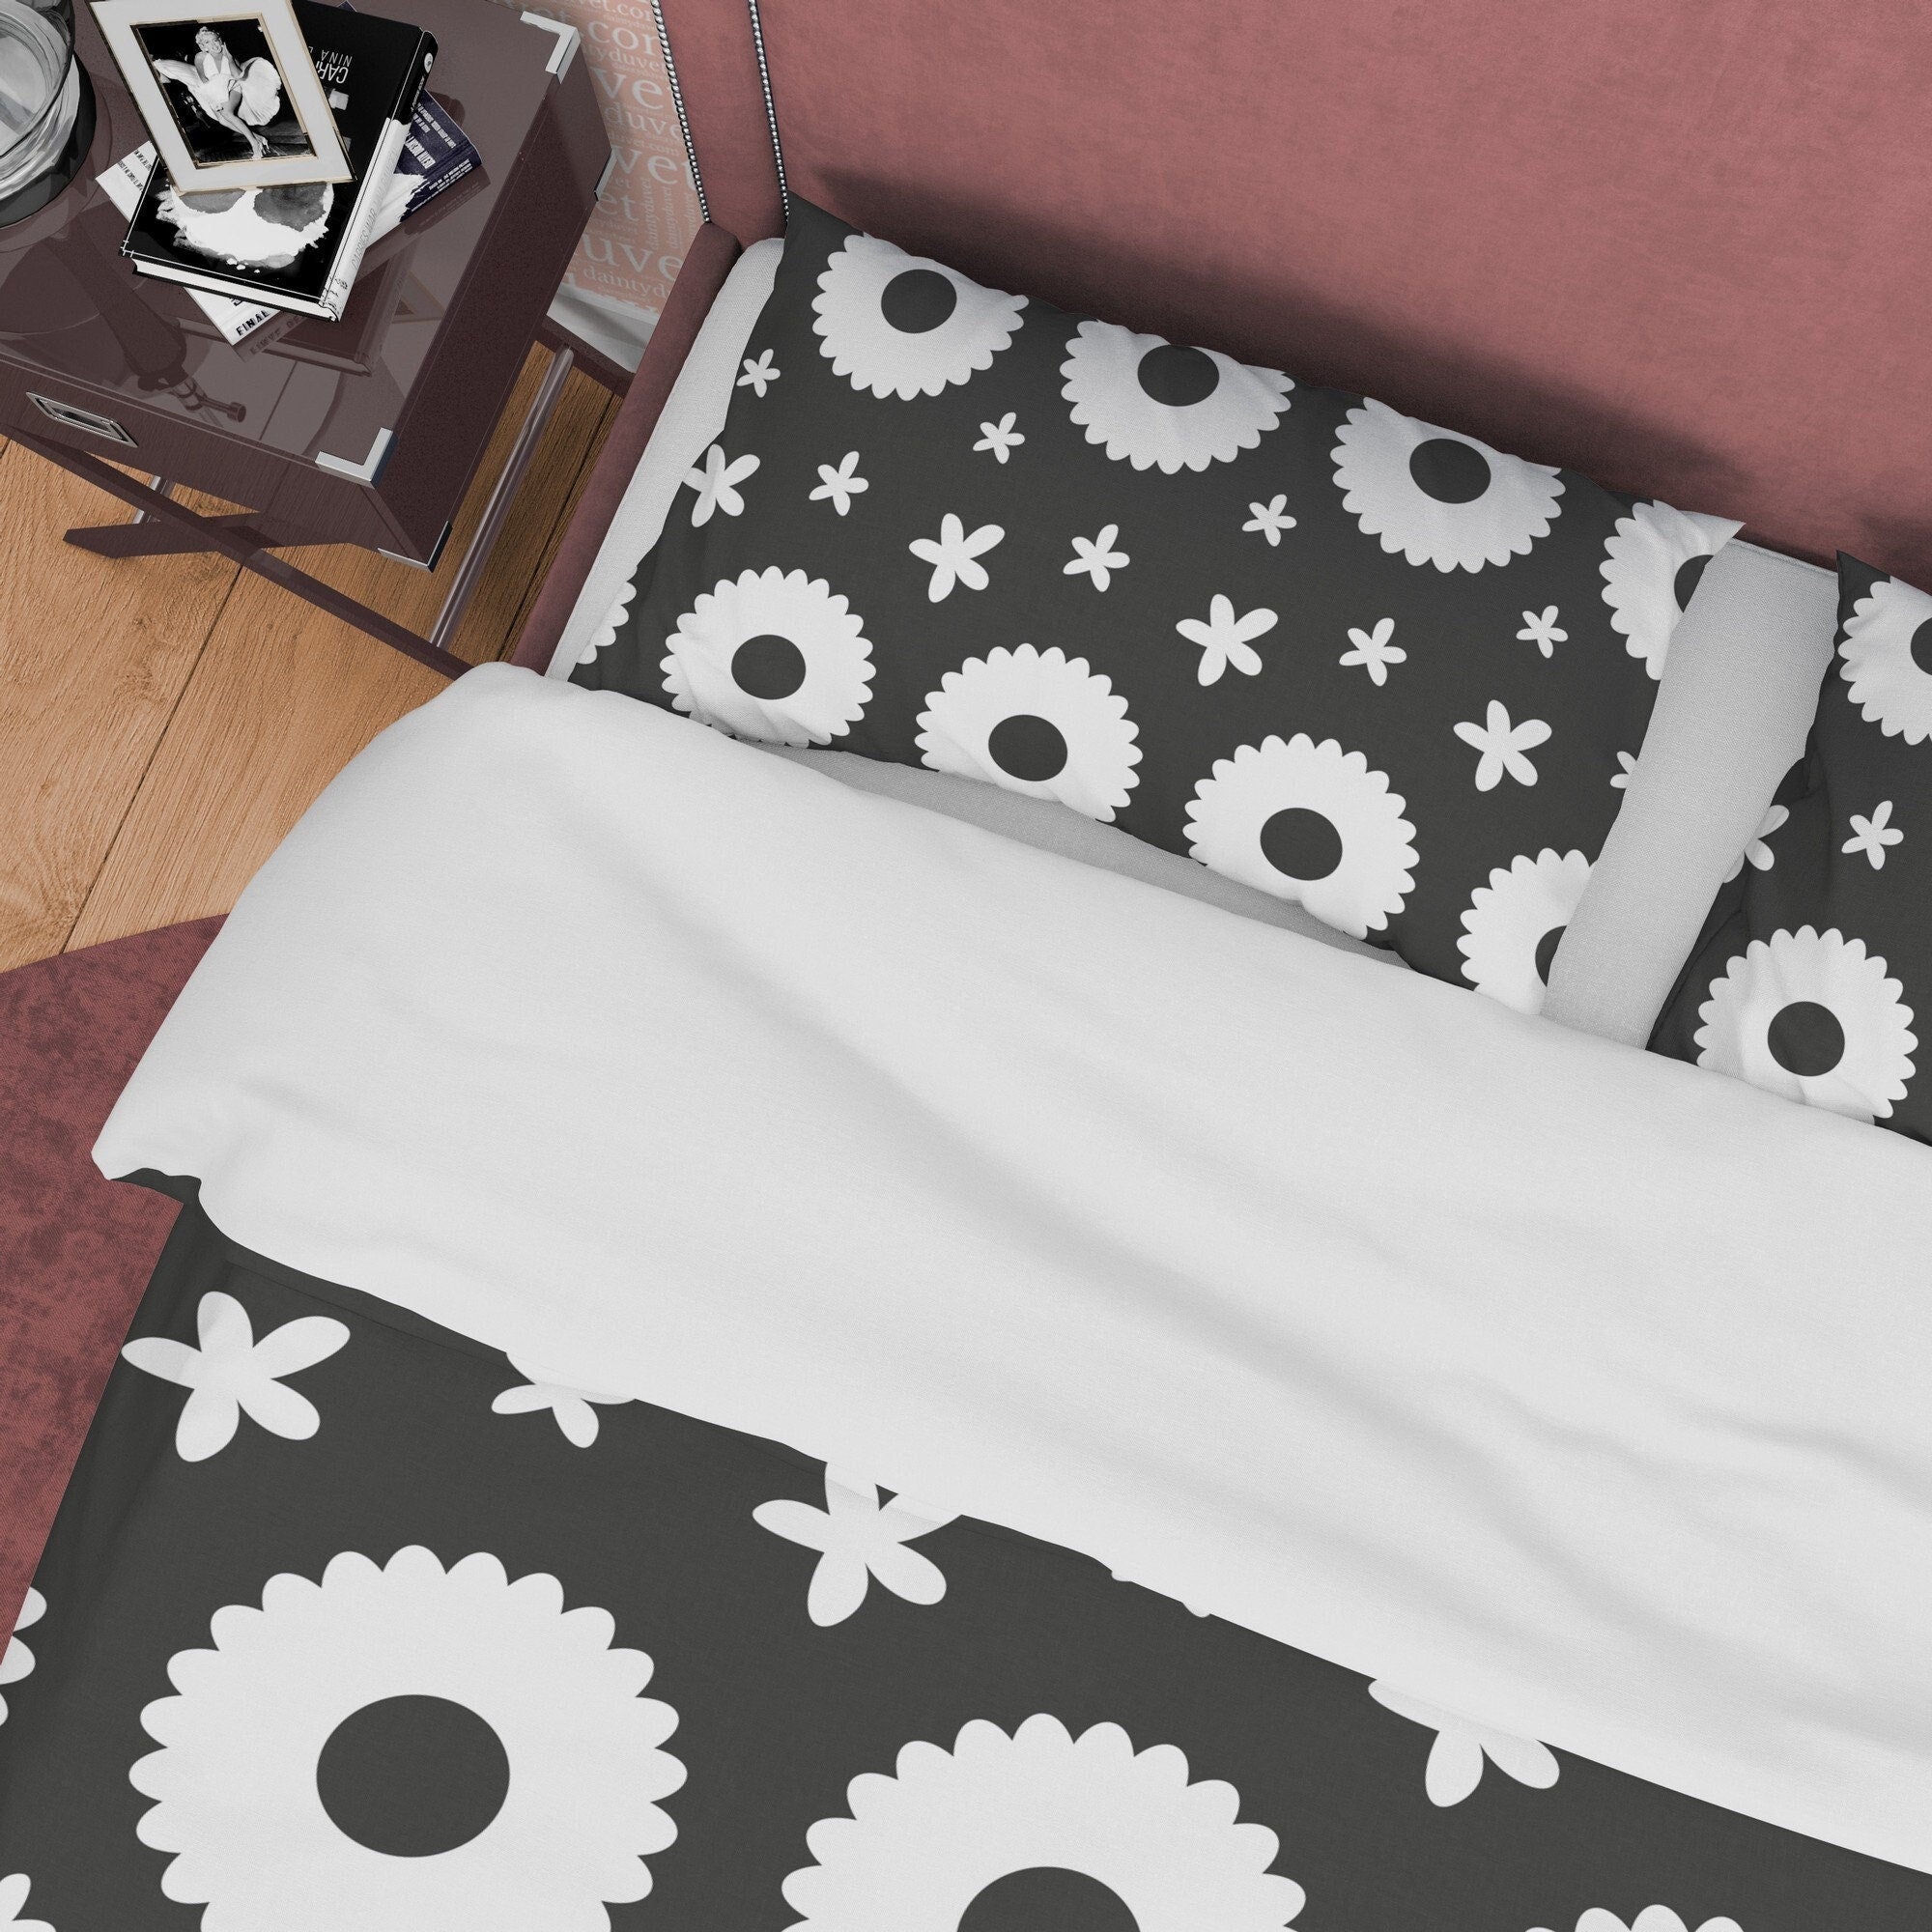 Retro Black and White Duvet Cover Set, Geometric Printed Bedding Set, Simple 90's Nostalgia Bedspread, Unique Opposite Color Bed Cover